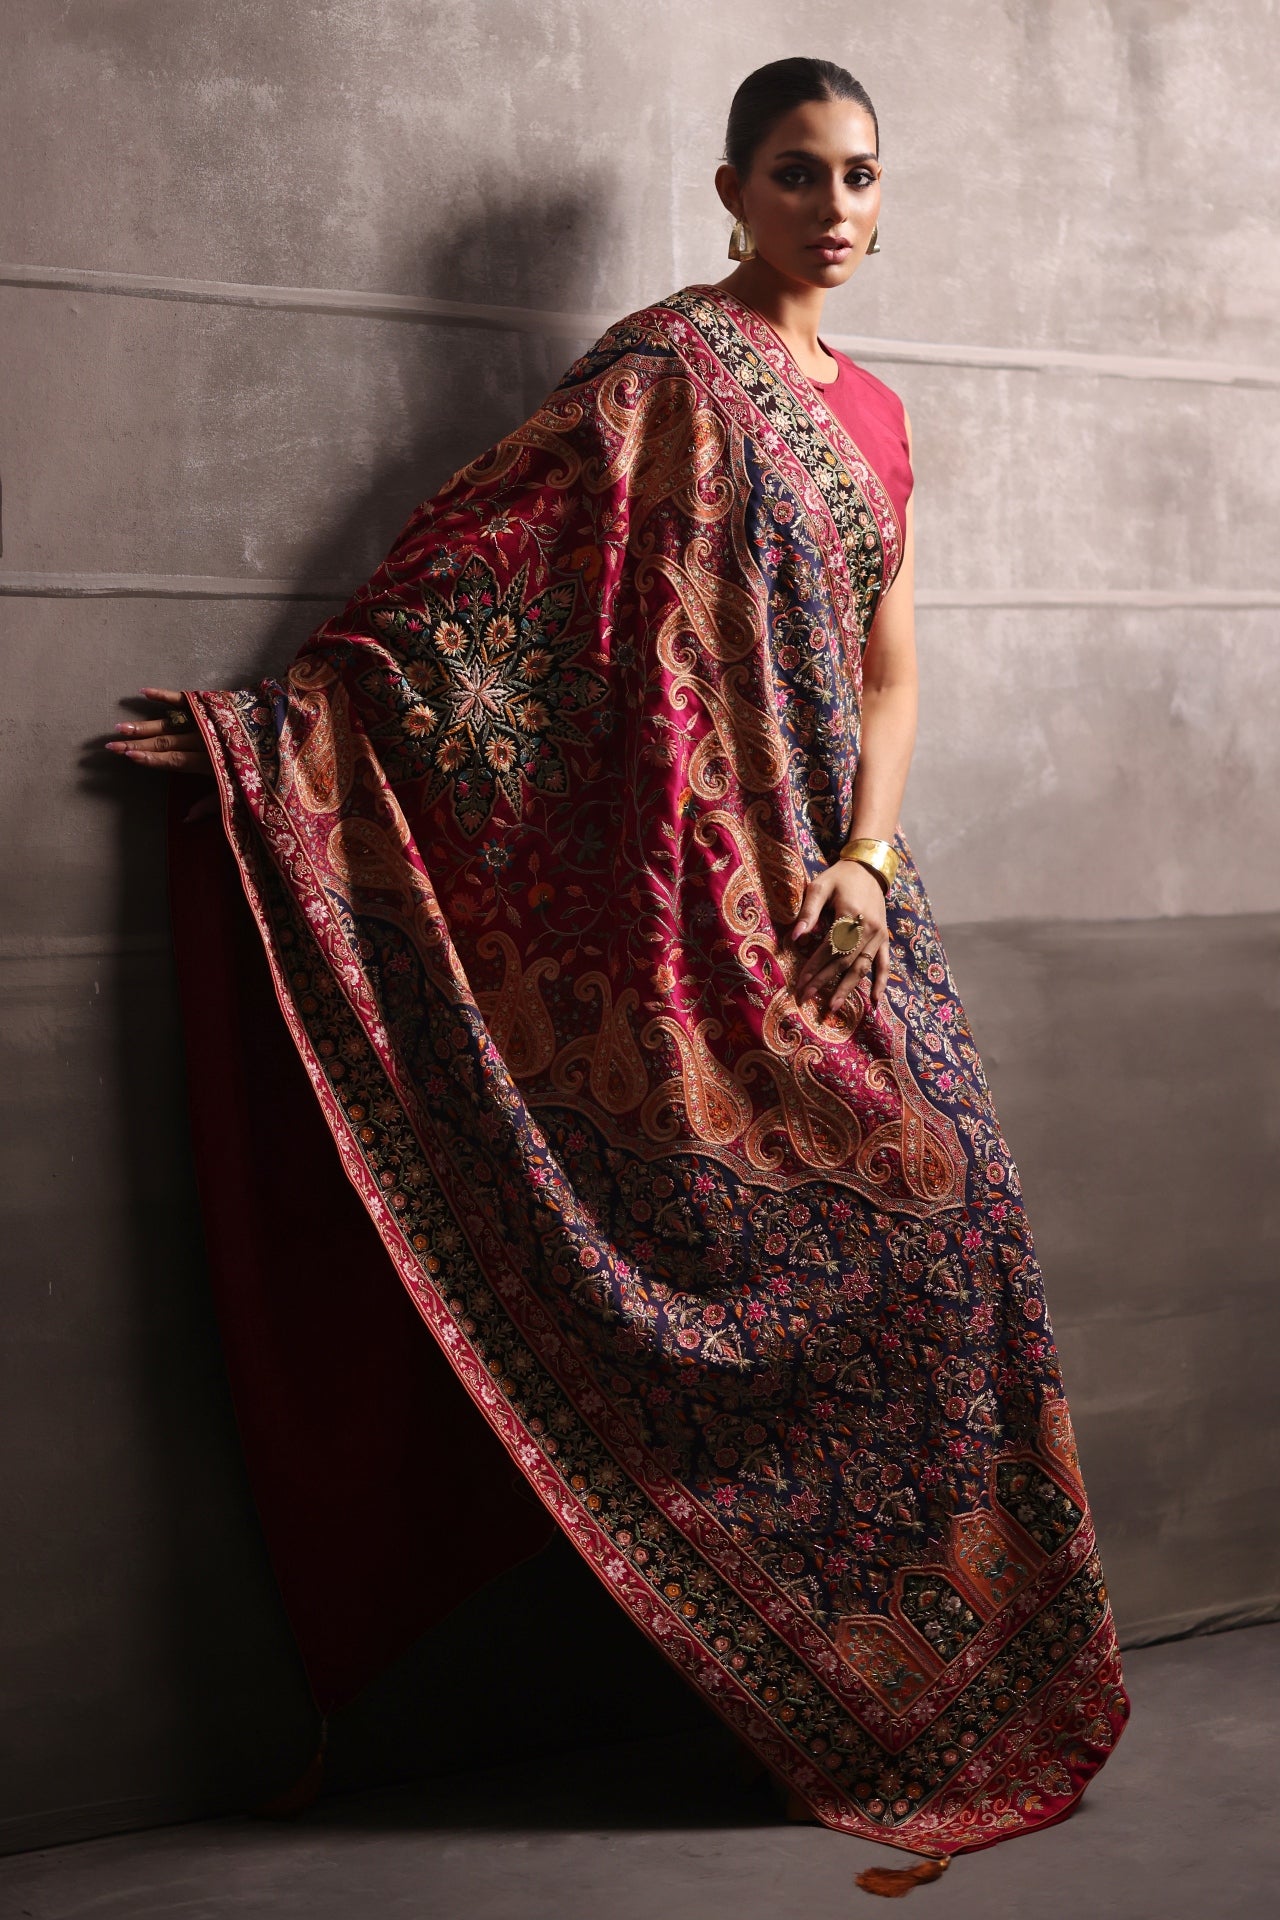 Aafrinish By Niazi Rabita Ali Rizwan Ul Haq Mughlai Kashidakari Shawl Reminiscent of the rich Mughal era our majestic heirloom shawl Pakistan Fashion